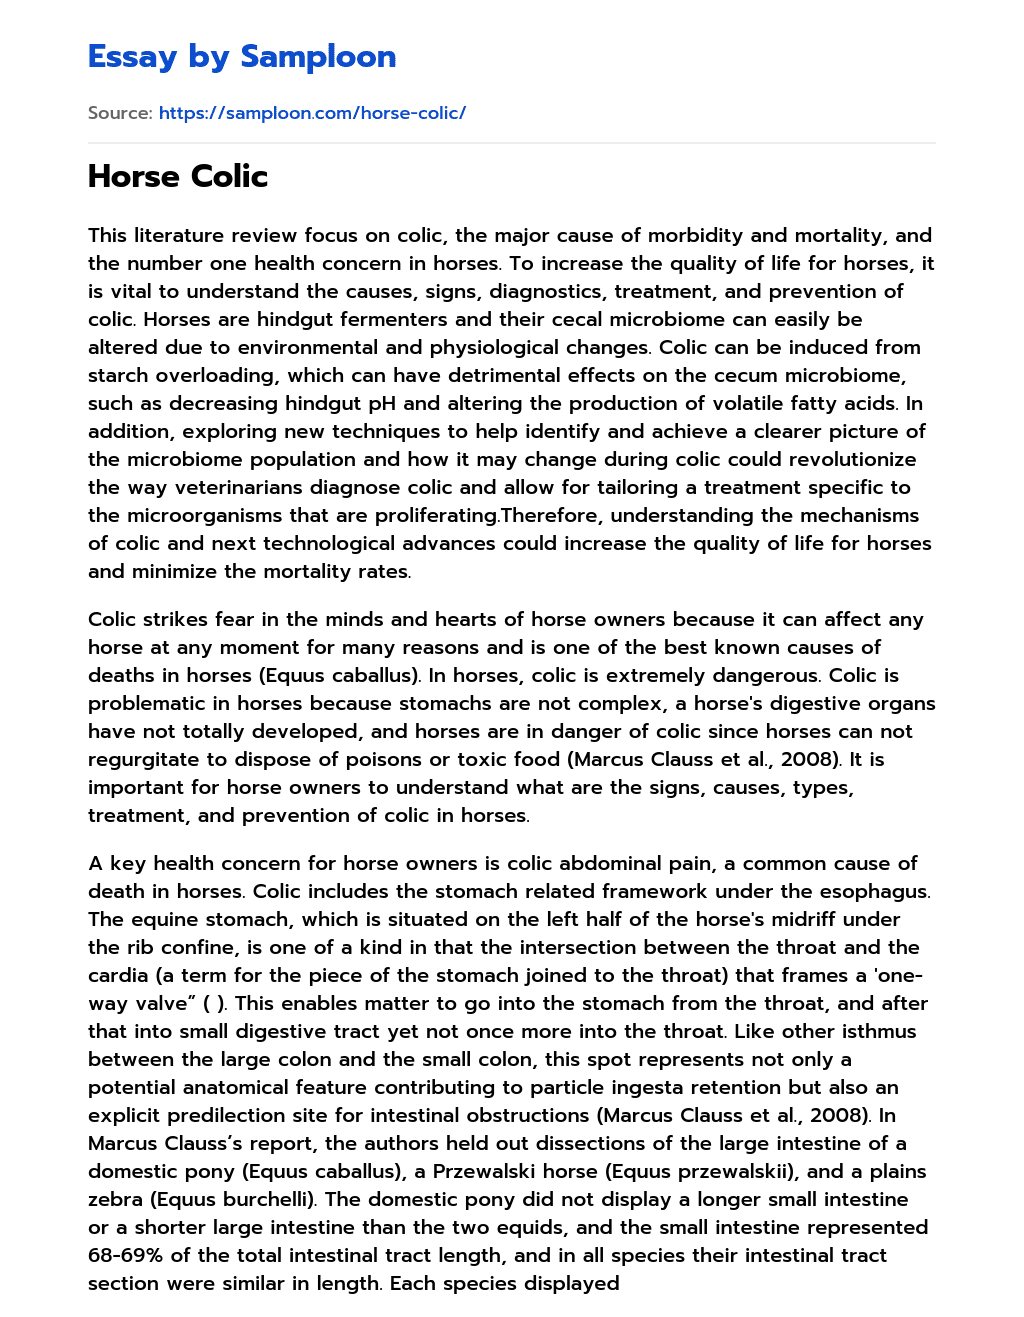 Horse Colic essay